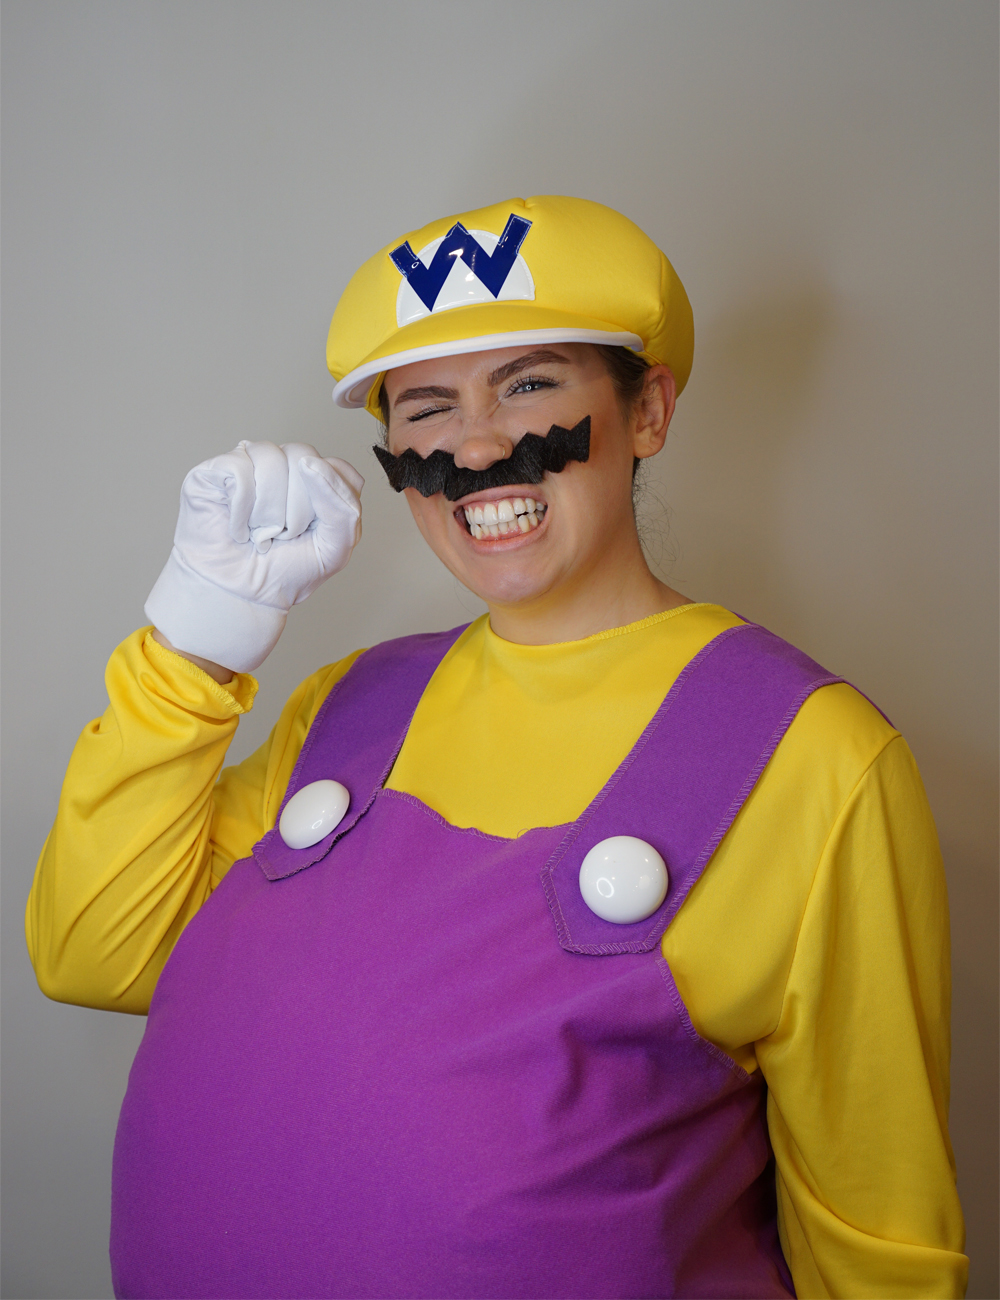 Wario Halloween costume idea for MarioKart fans